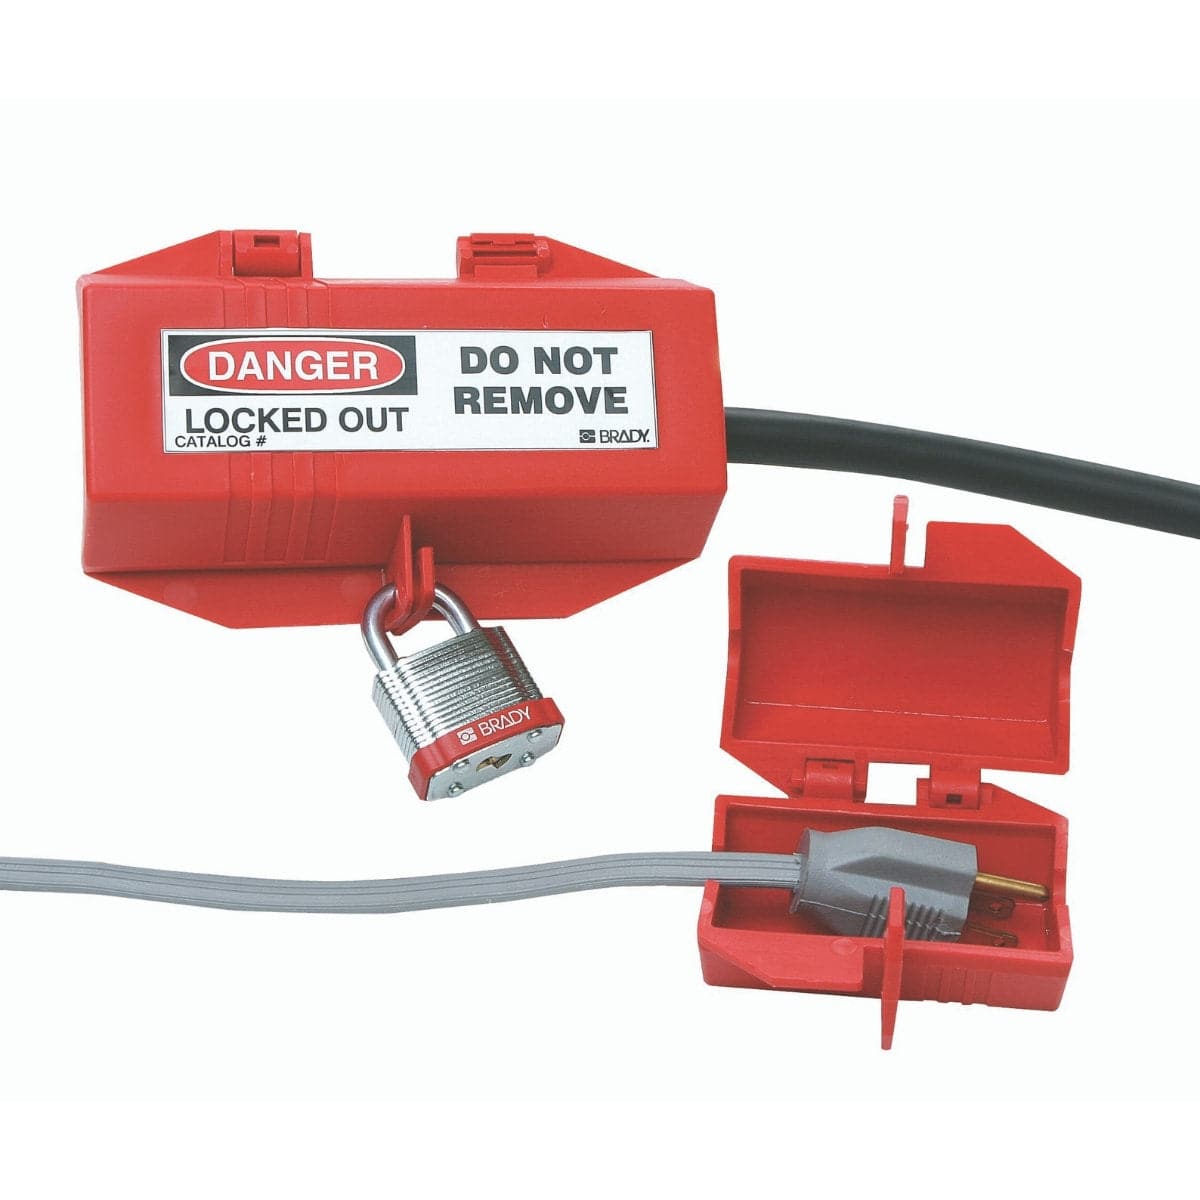 Brady Industrial Plug Locklock Out Device Large